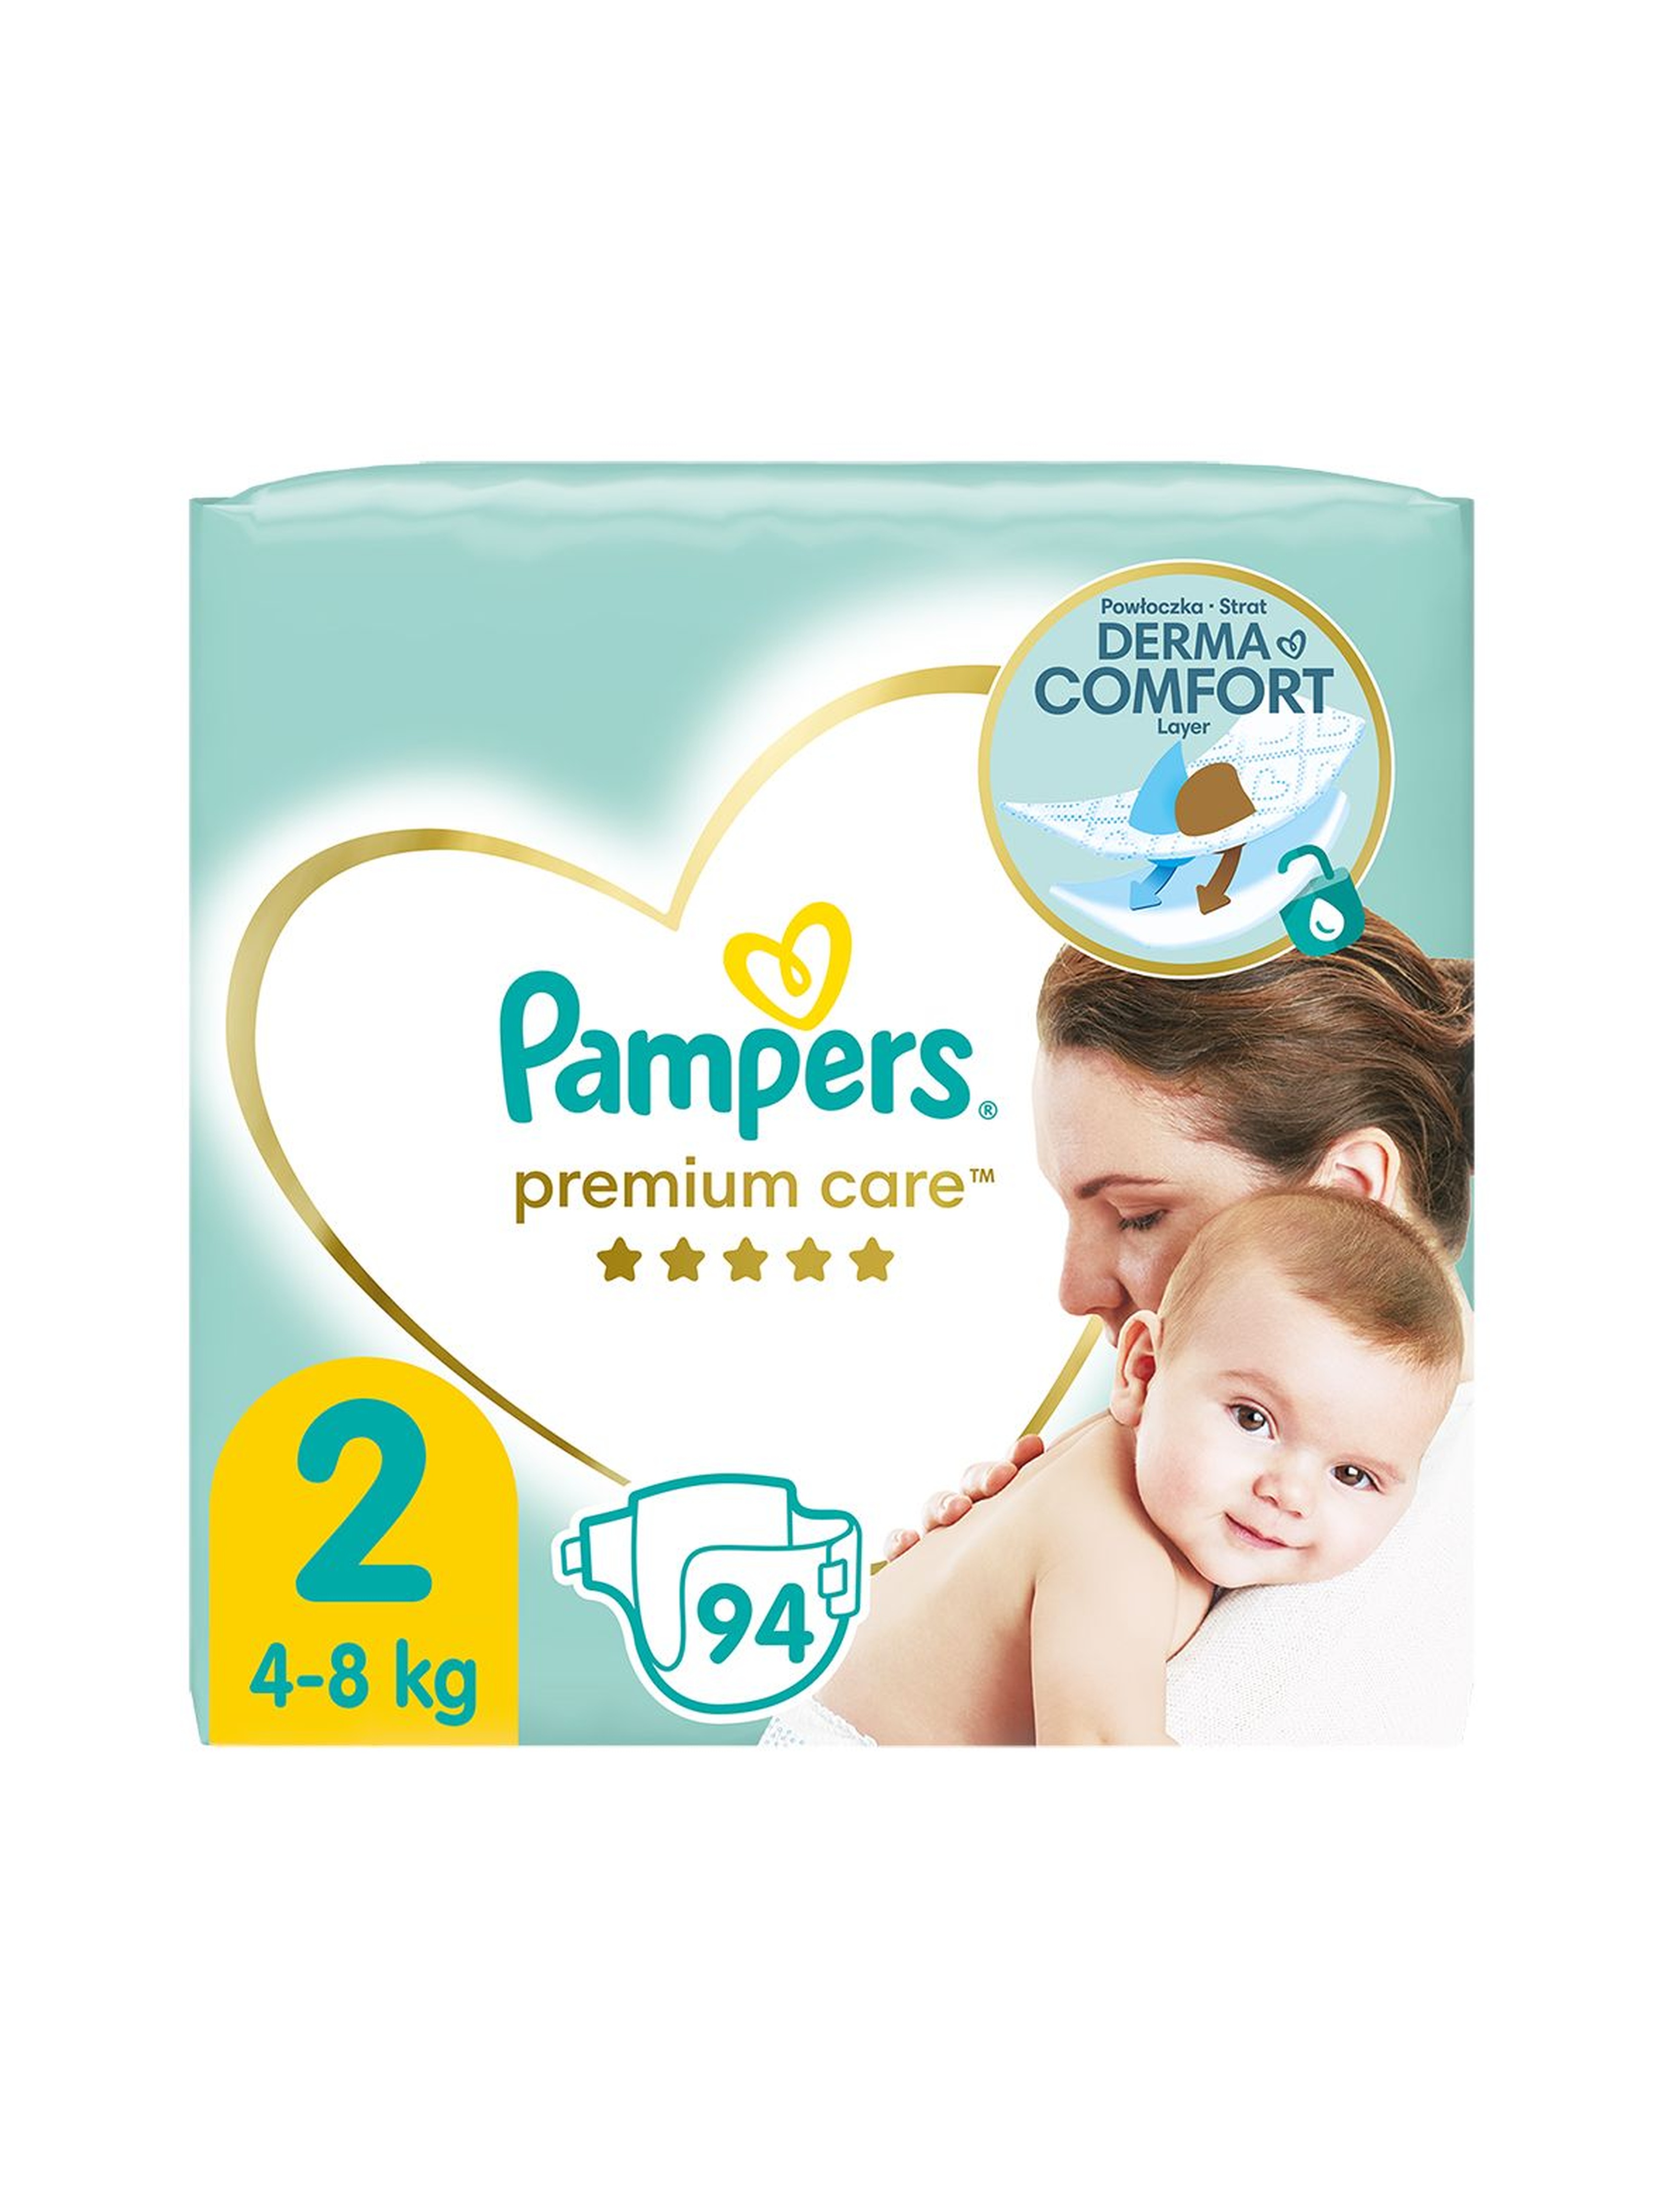 Pampers Premium Care, Rozmiar 2, 94 pieluszki 4-8kg